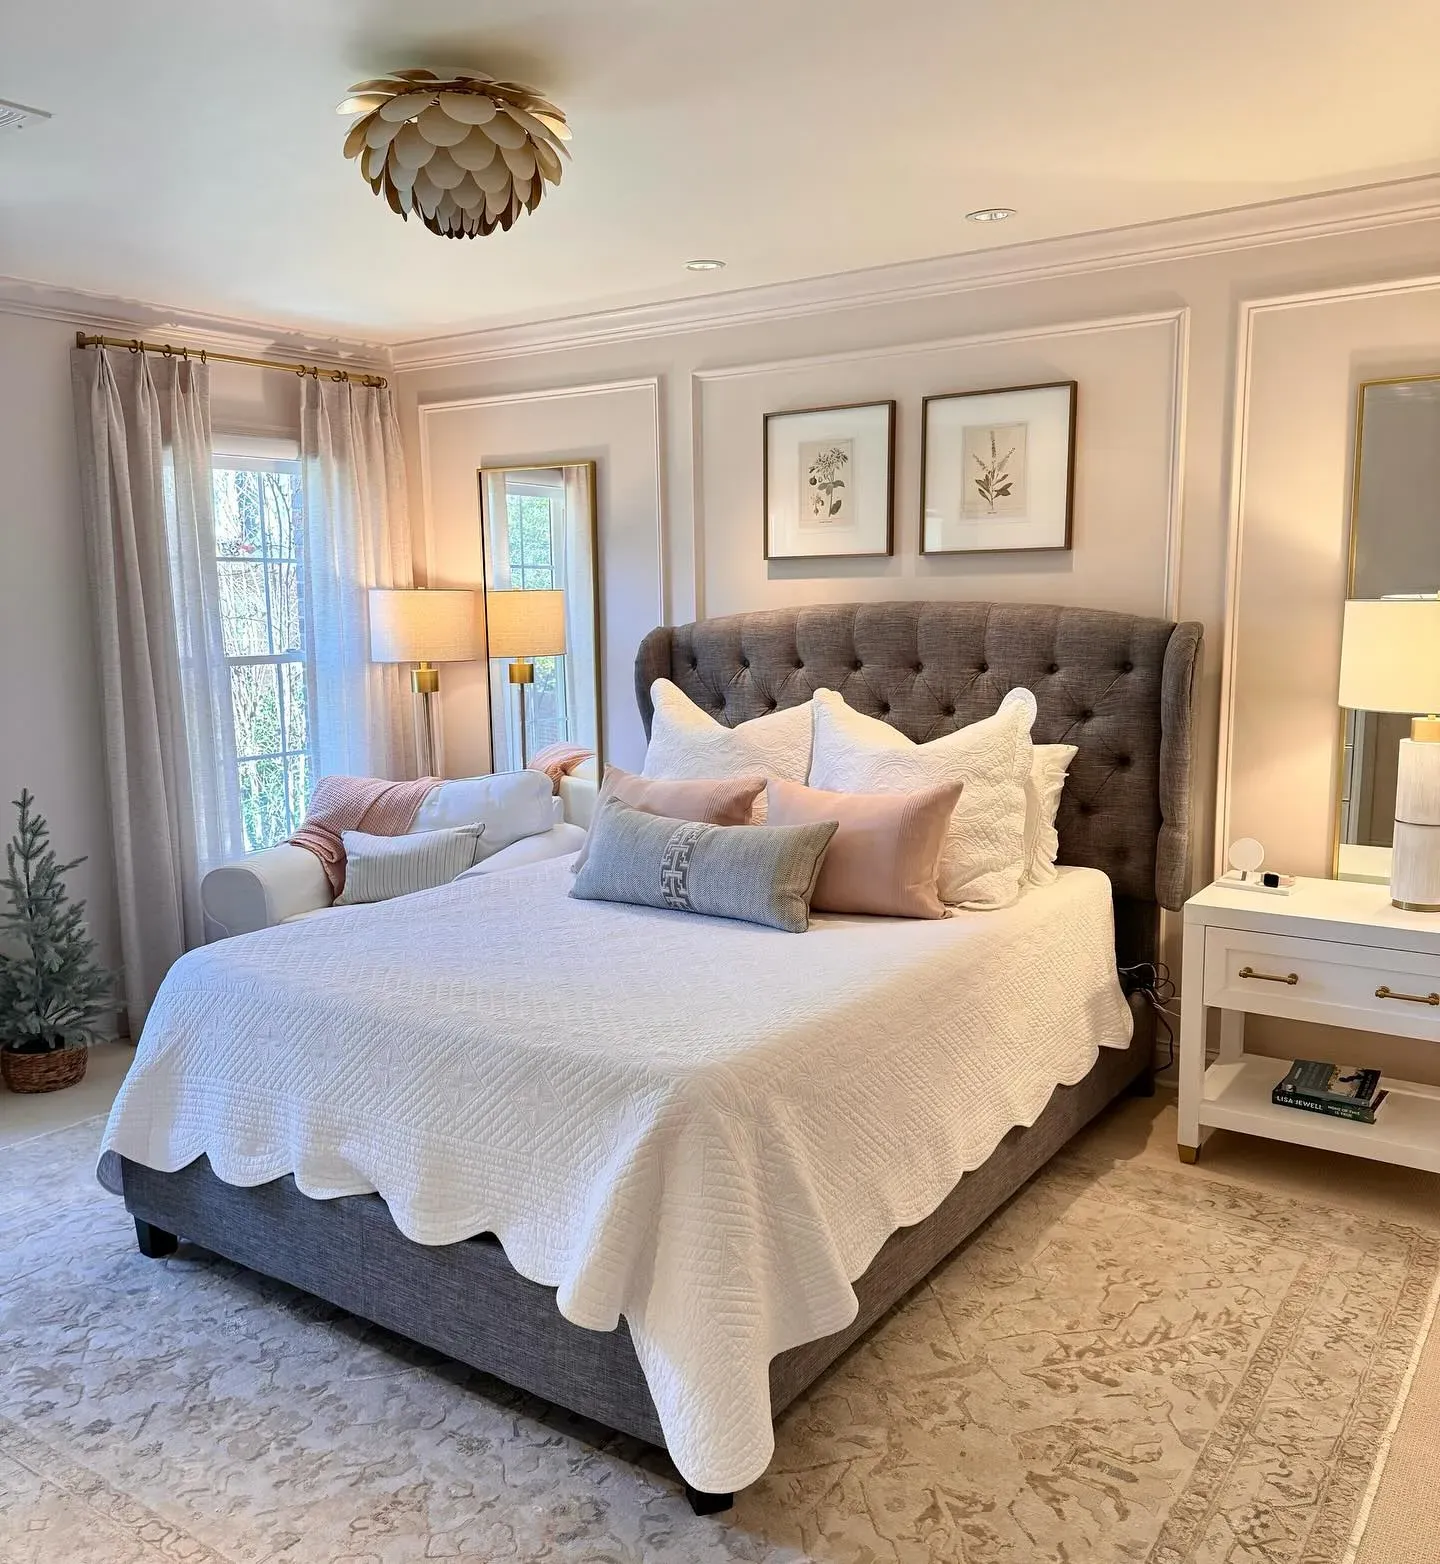 Sherwin Williams Polite White bedroom interior